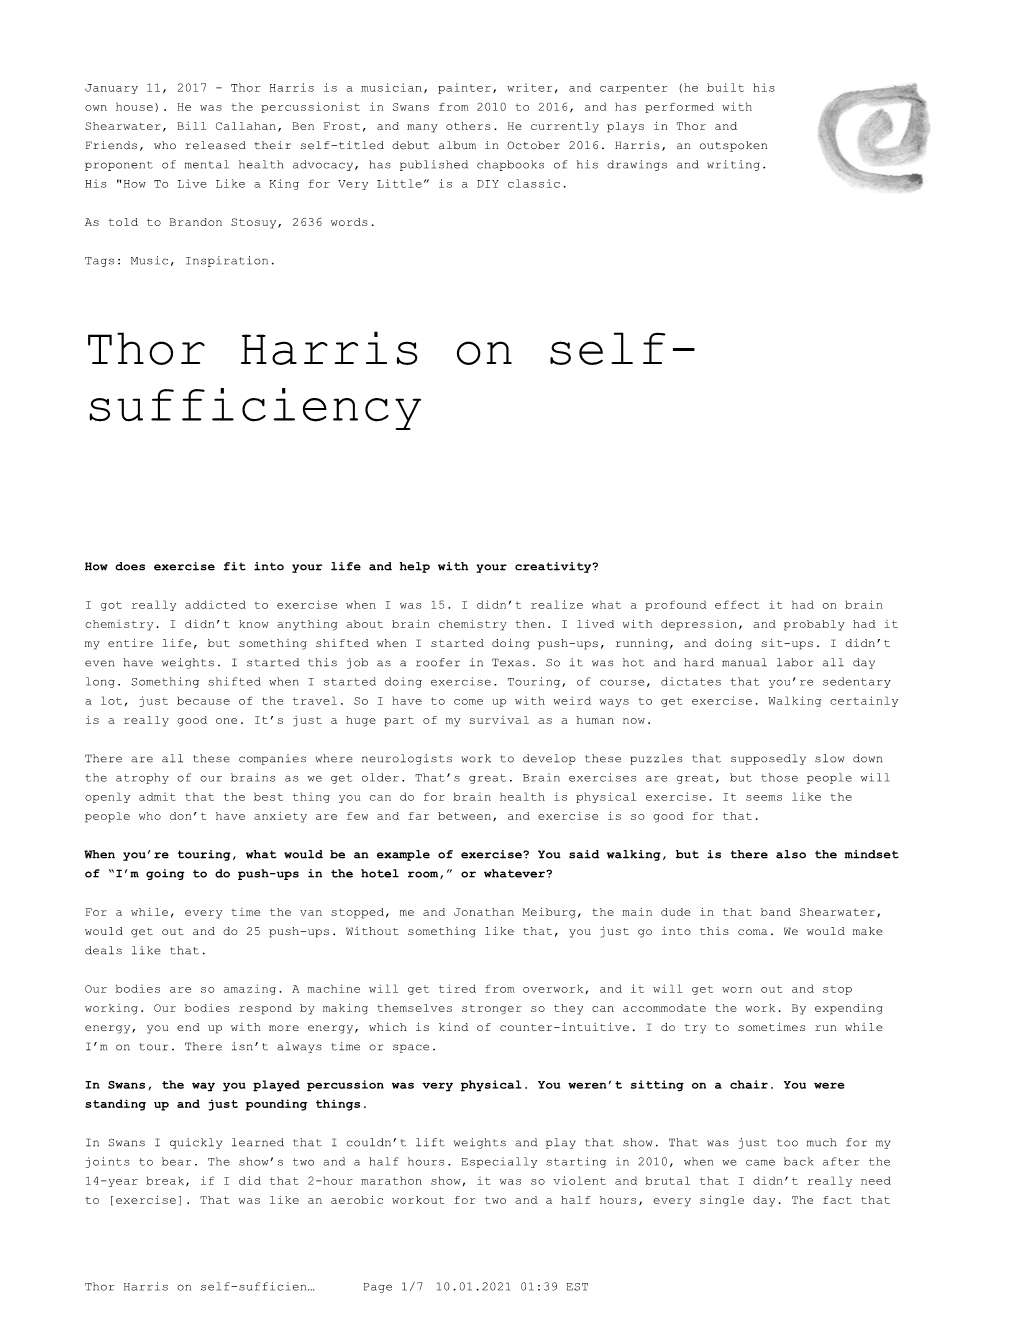 Thor Harris on Self-Sufficiency